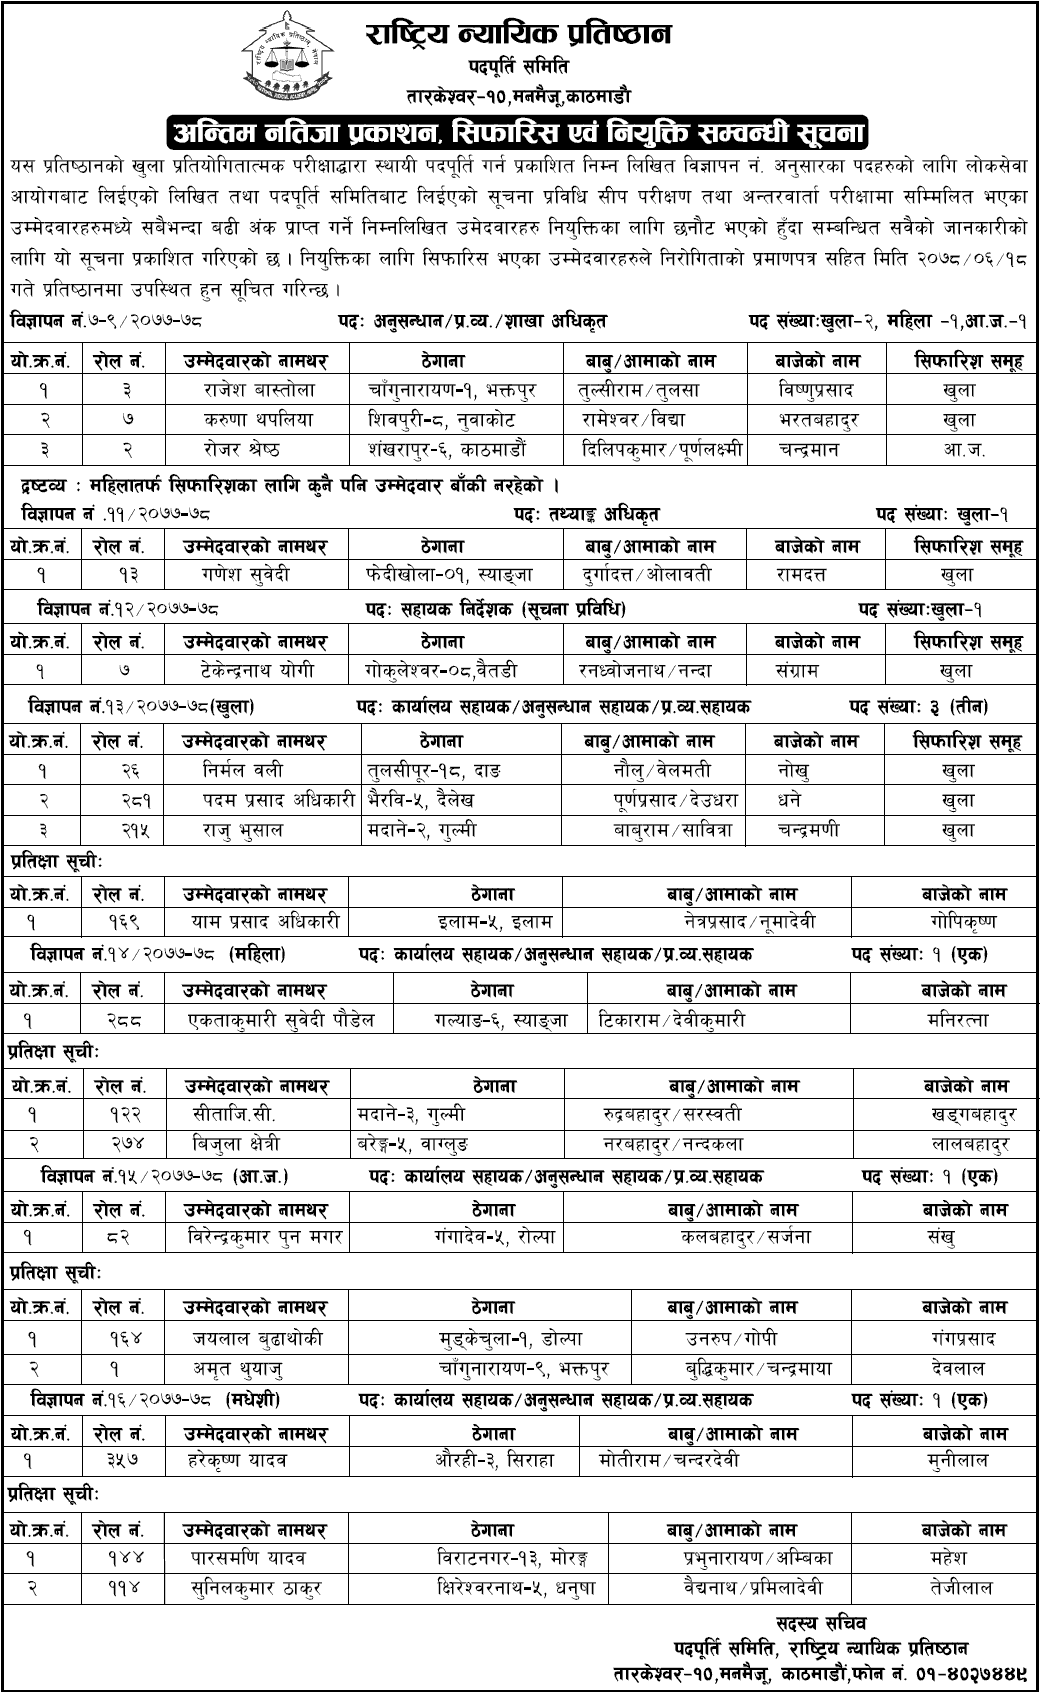 National Judicial Academy (Rastriya Nyayik Pratisthan) Final Result of Various Positions